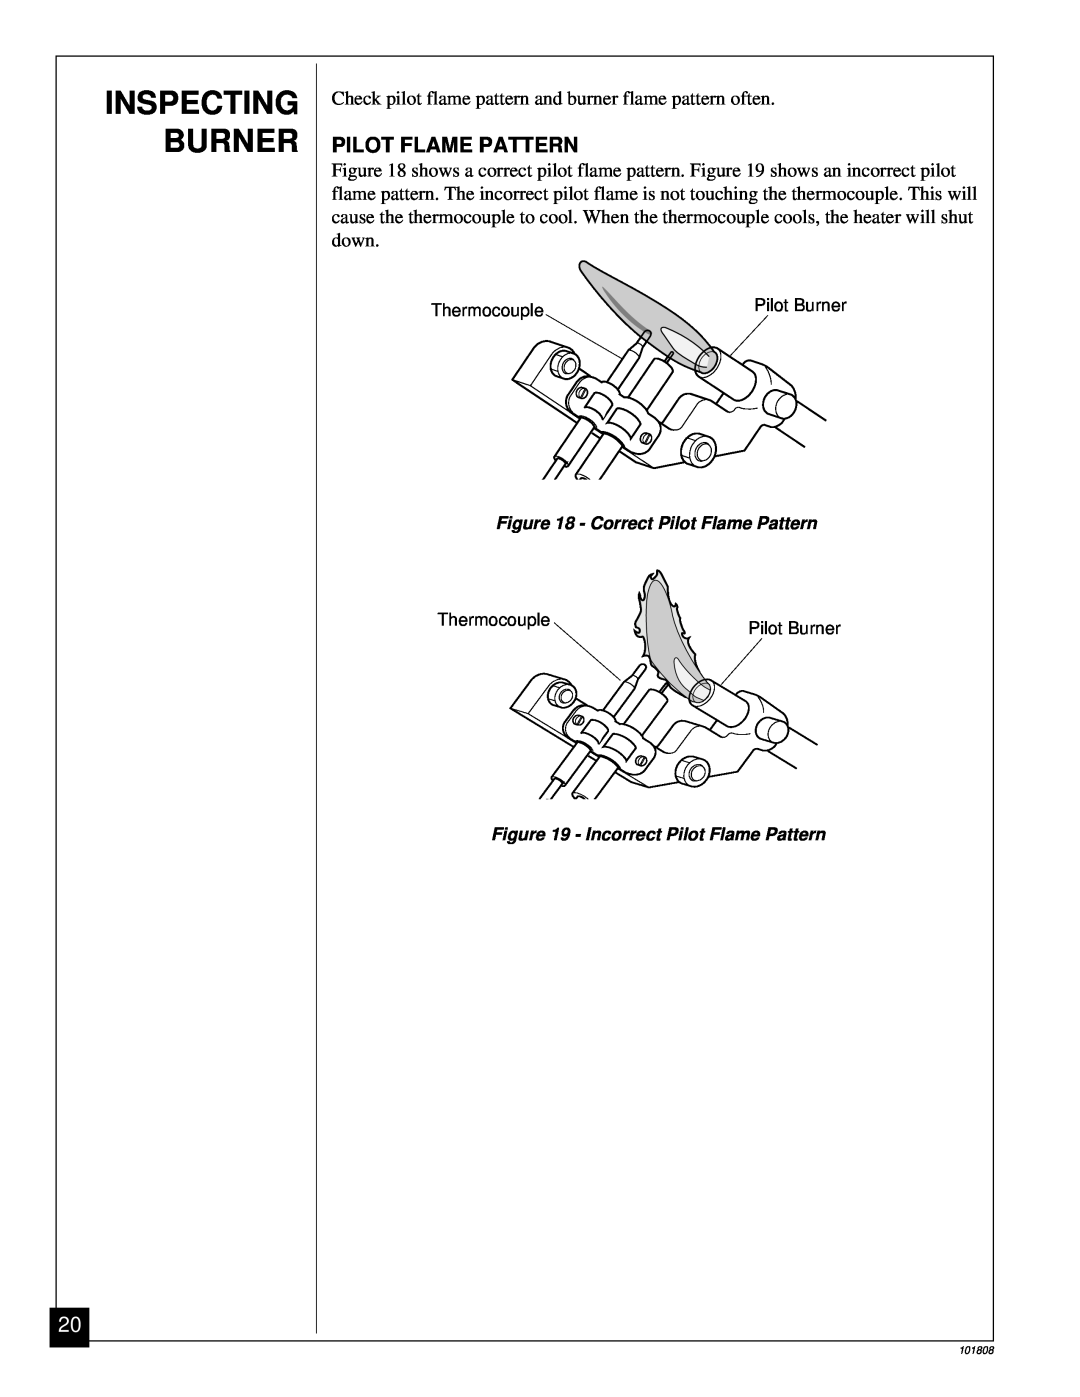 Desa Tech 28, 18 installation manual Inspecting Burner, Pilot Flame Pattern 